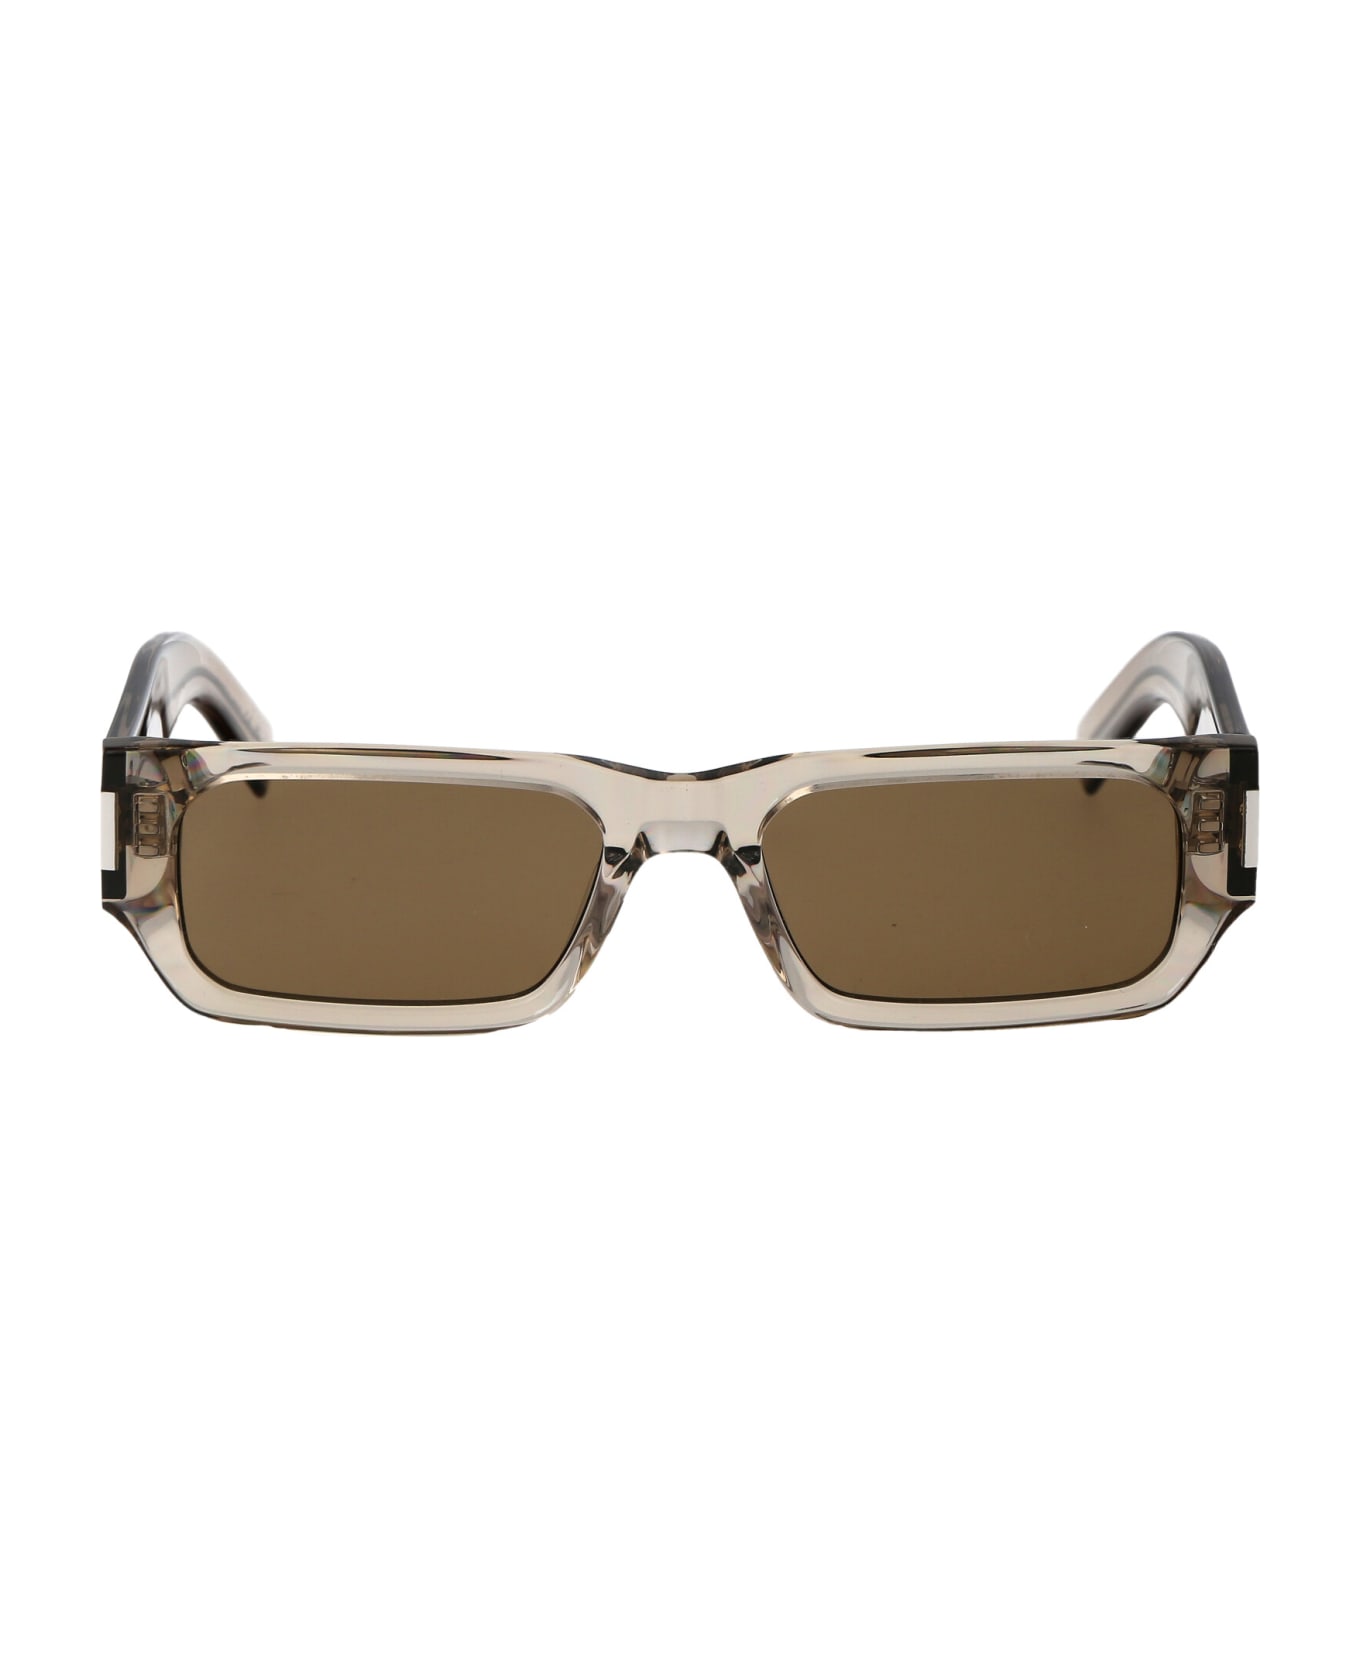 Saint Laurent Eyewear Sl 660 Sunglasses - 004 BEIGE BEIGE BROWN